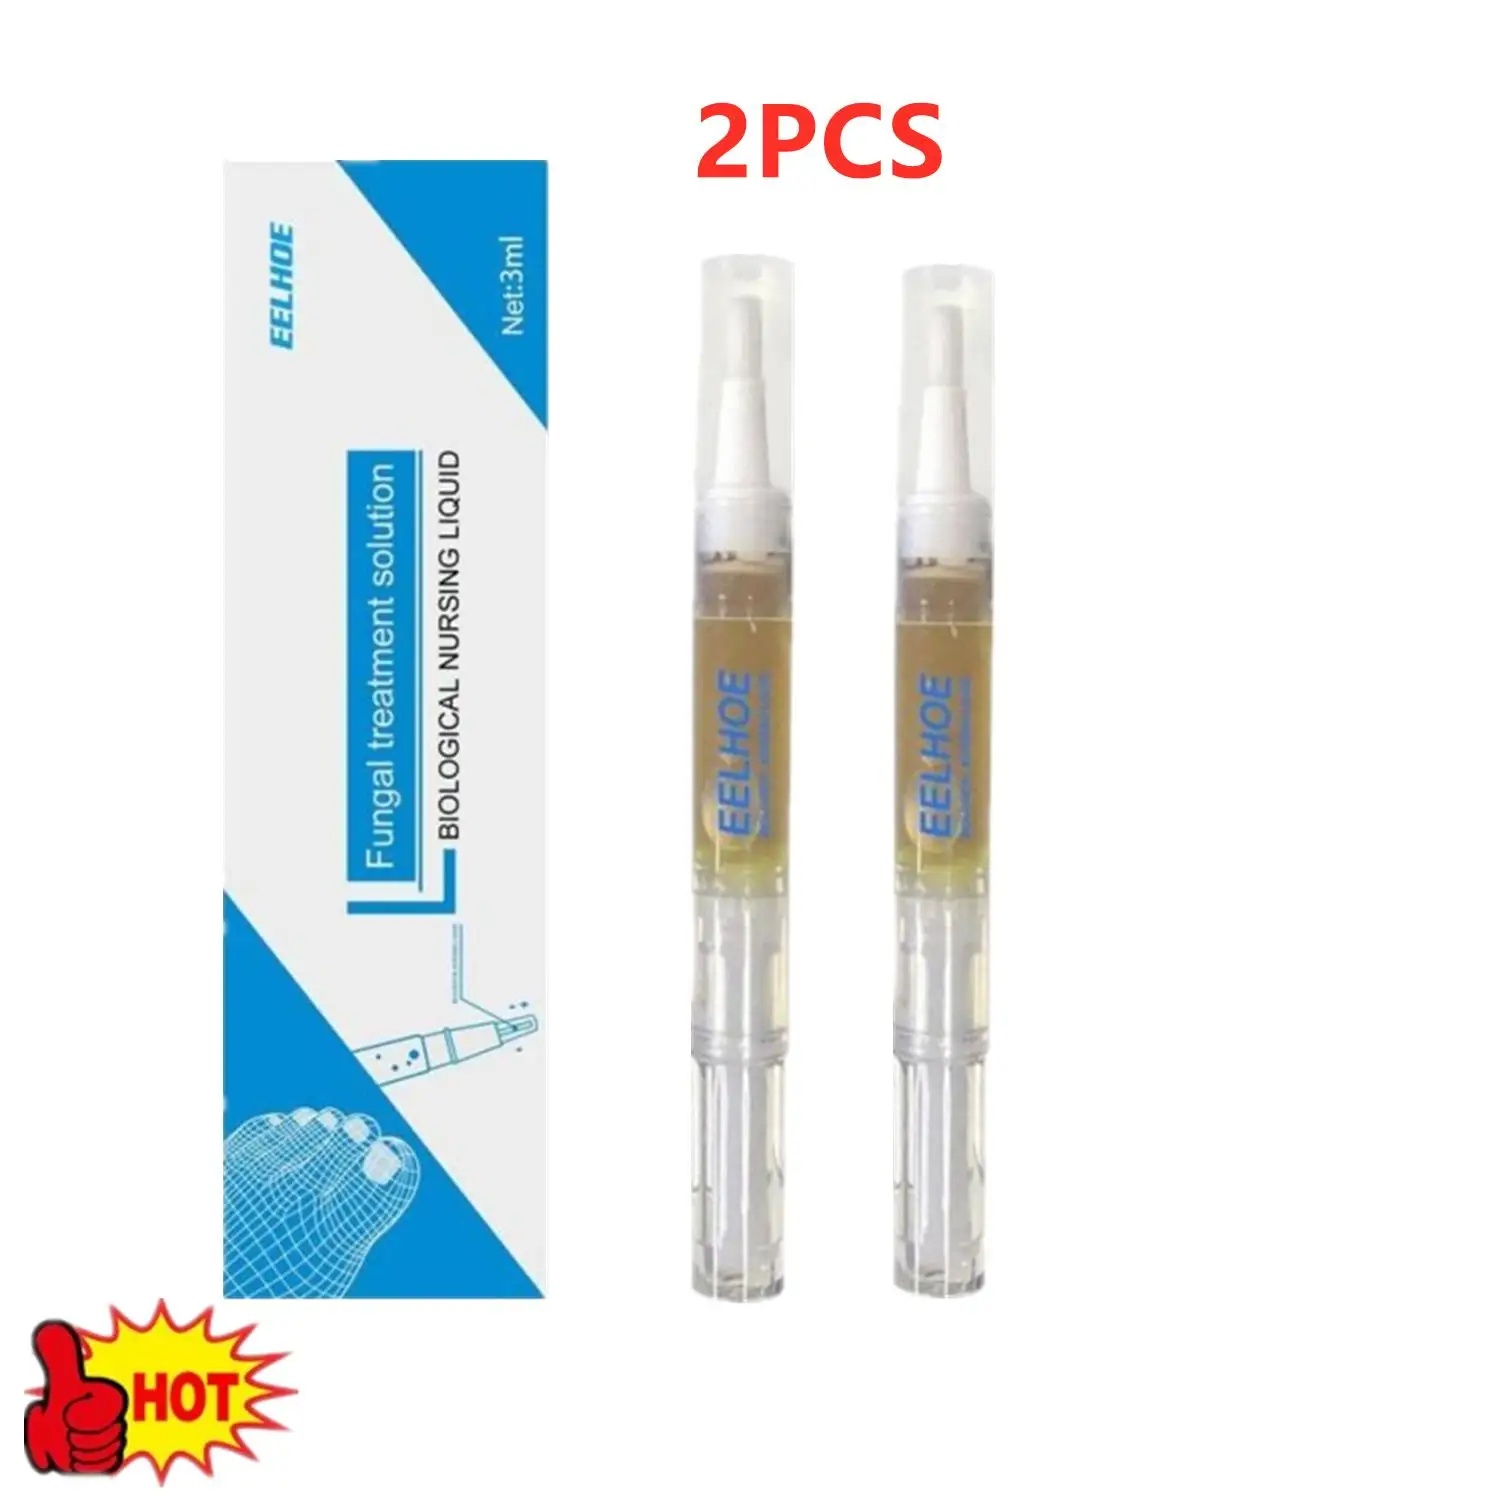 

2PCS 3ml Nail Fungal Treatment Pen Anti Fungus Infection Biological Repair Solution Nutritious Oil 3ml Restores Healthy Toenails